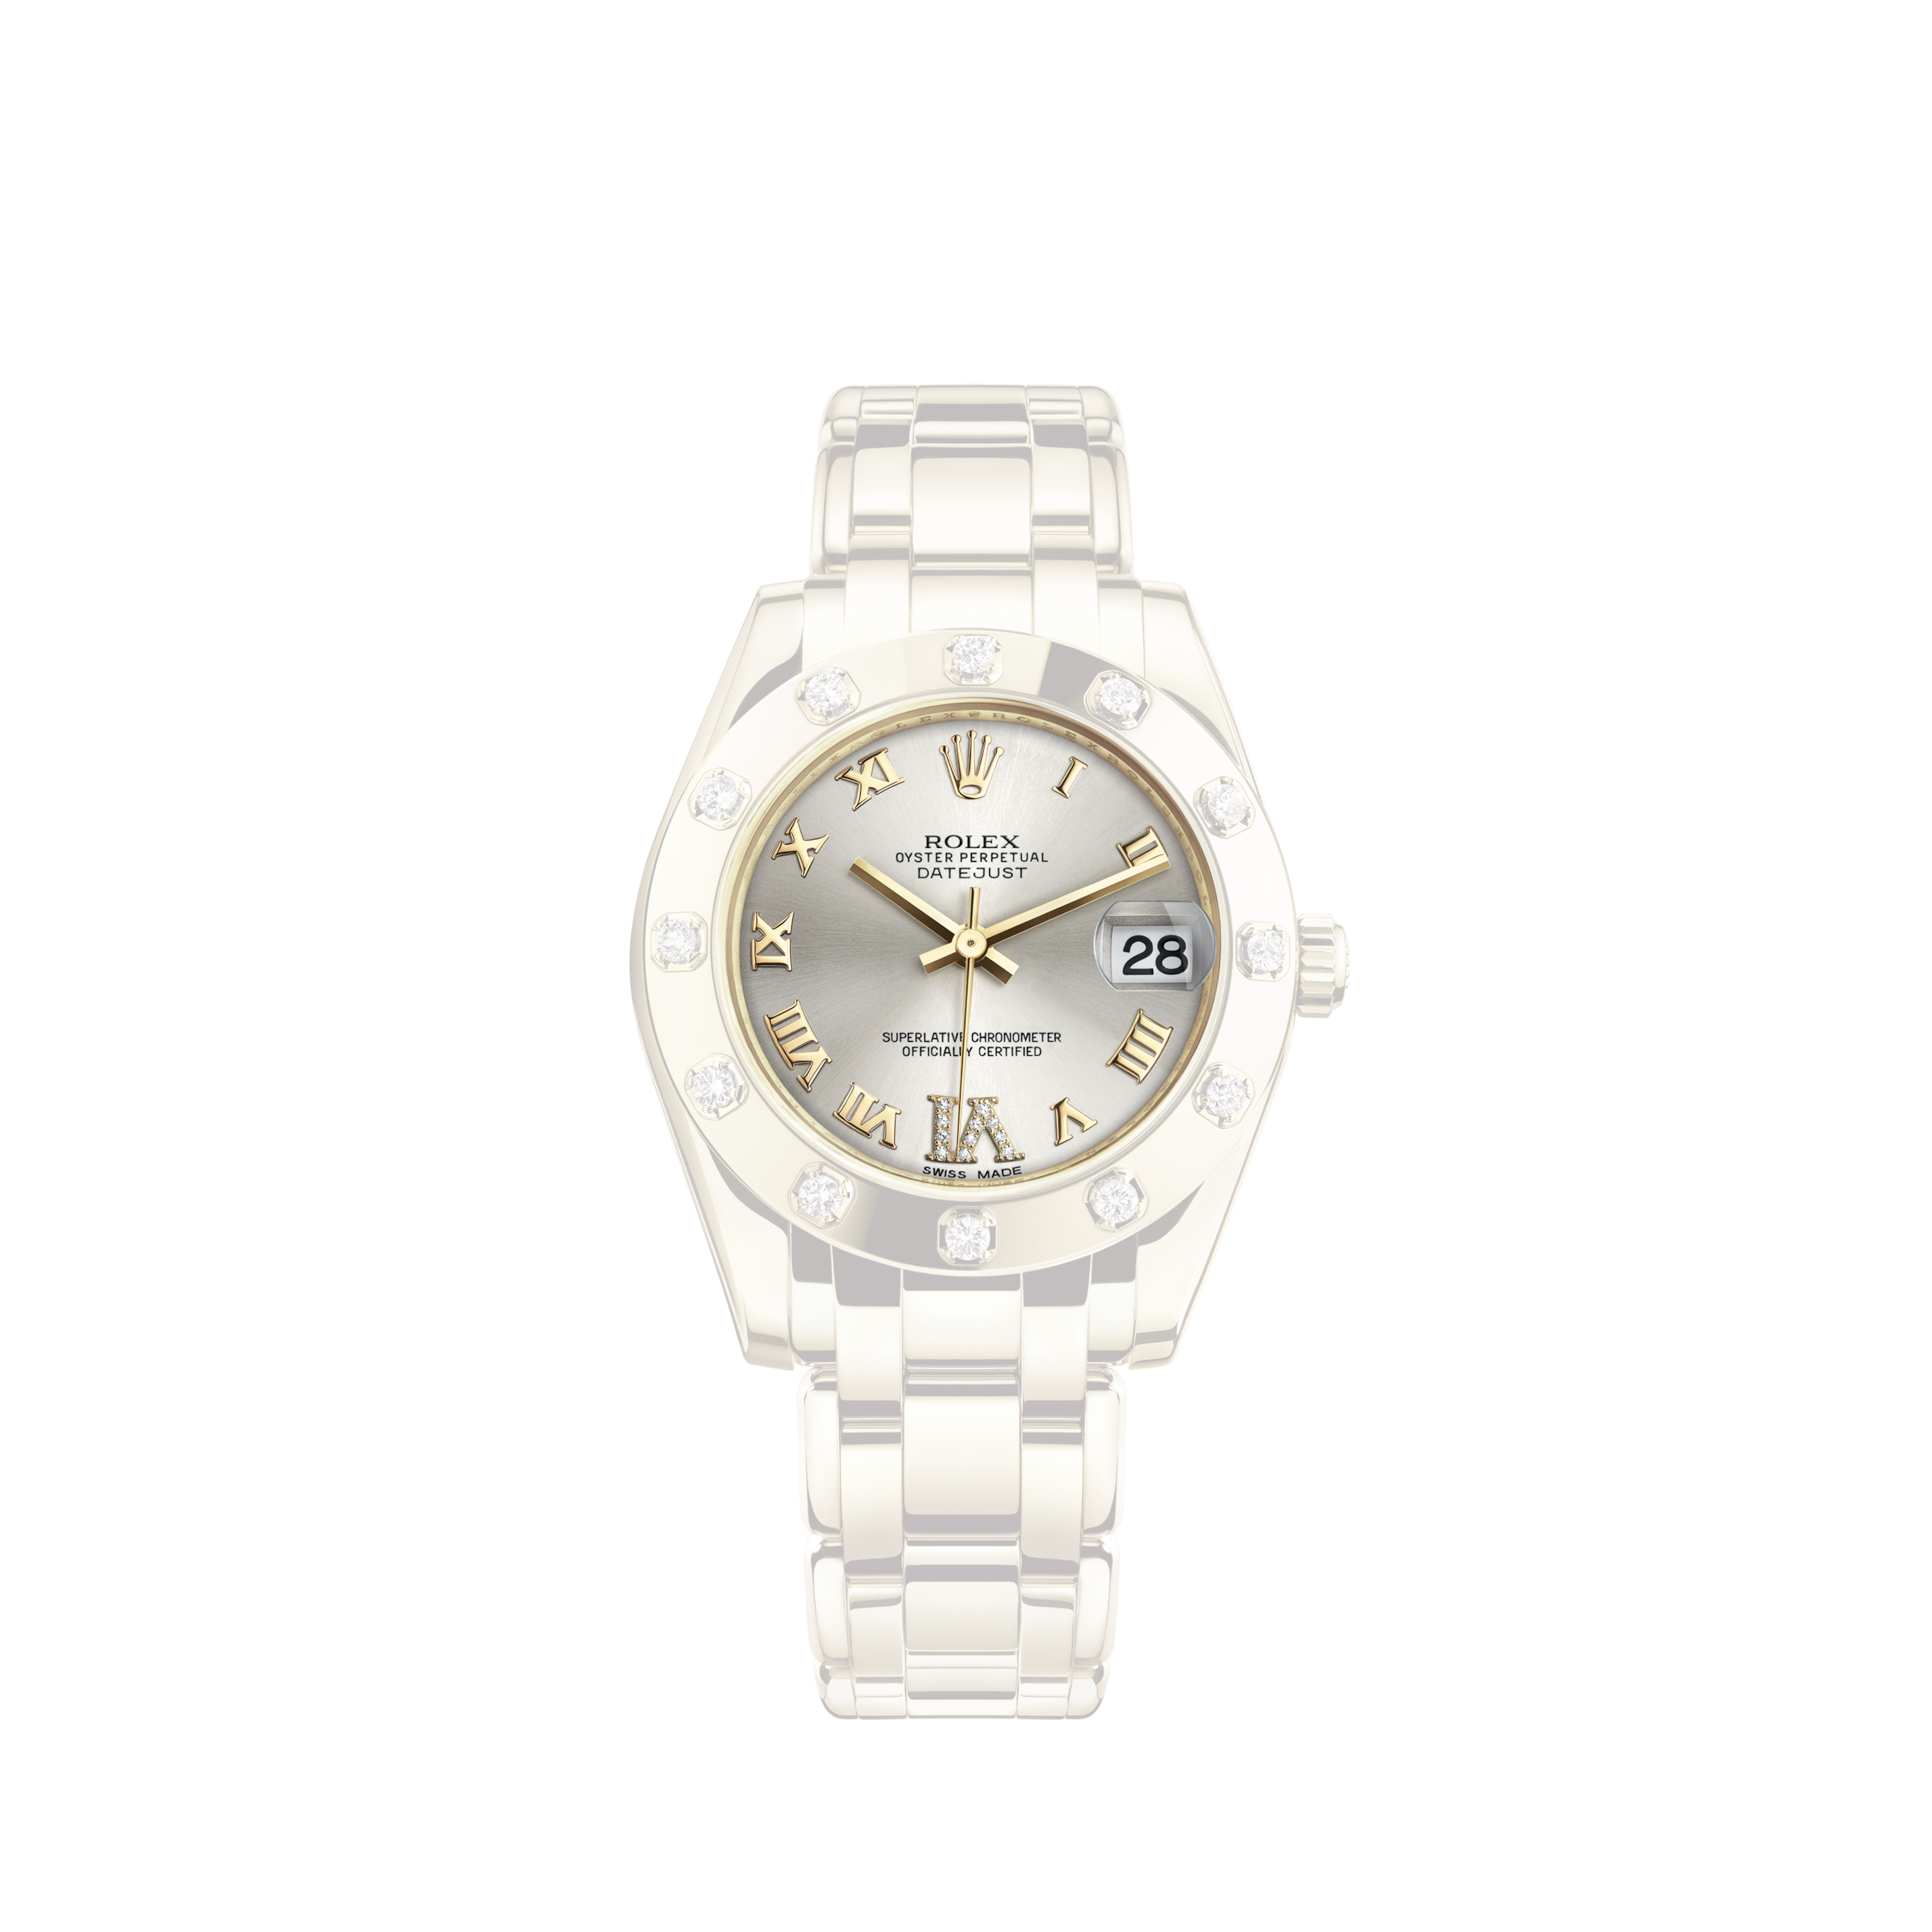 Rolex Submariner Men's Vintage Stainless Steel Watch 5513 Bart Simpson dialRolex Submariner Men's Watch With Serti Diamond Dial 16613